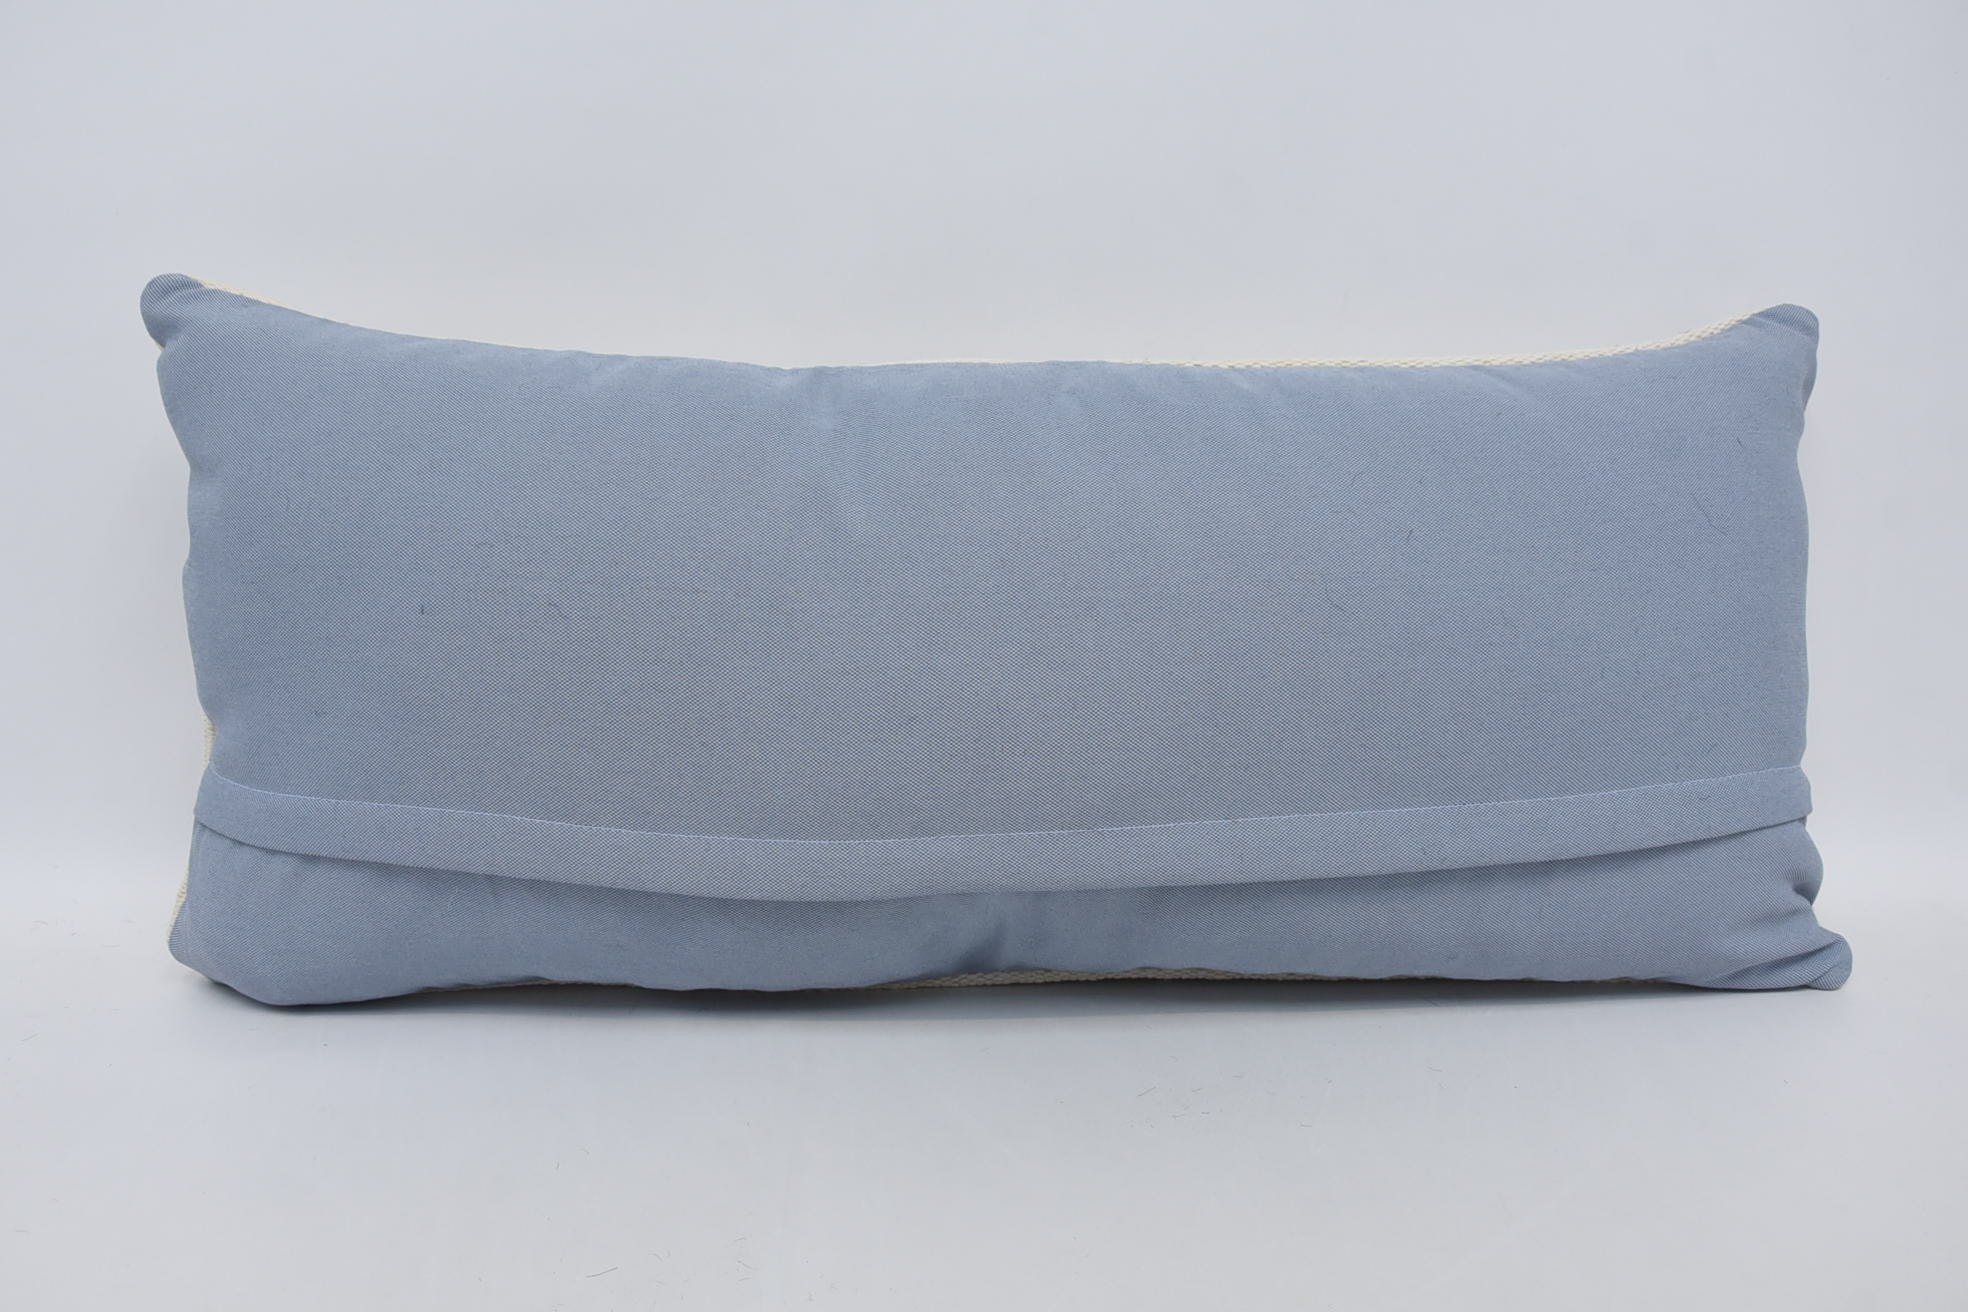 Boho Pillow, Farmhouse Pillow Sham, Boho Pillow Sham Cover, Decorative Throw Pillow Case, Pillow for Sofa, 16"x36" White Pillow Case